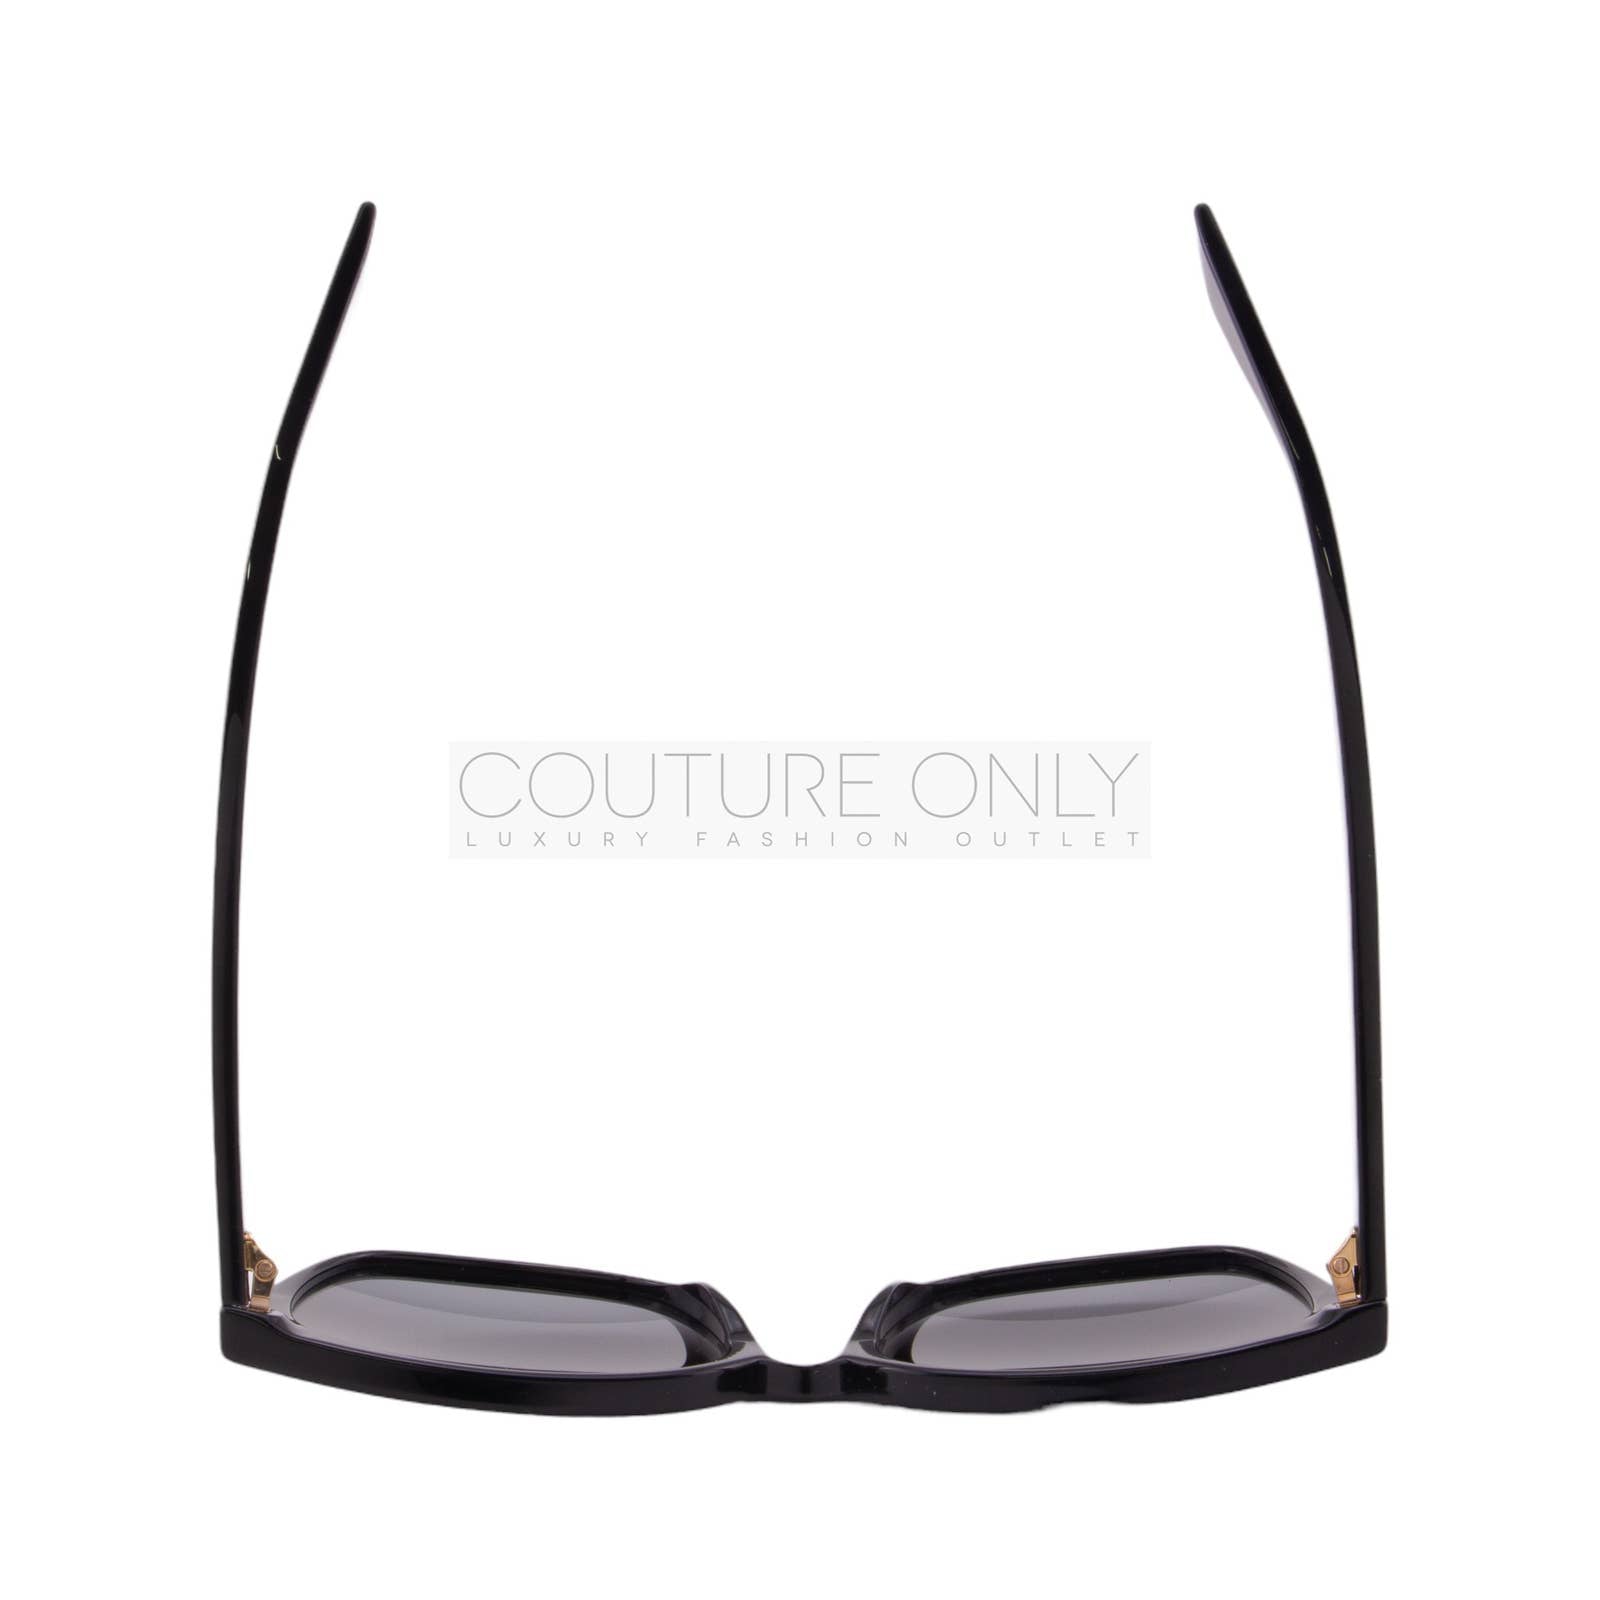 Women Black Oversized Square Sunglasses GG0022S-001